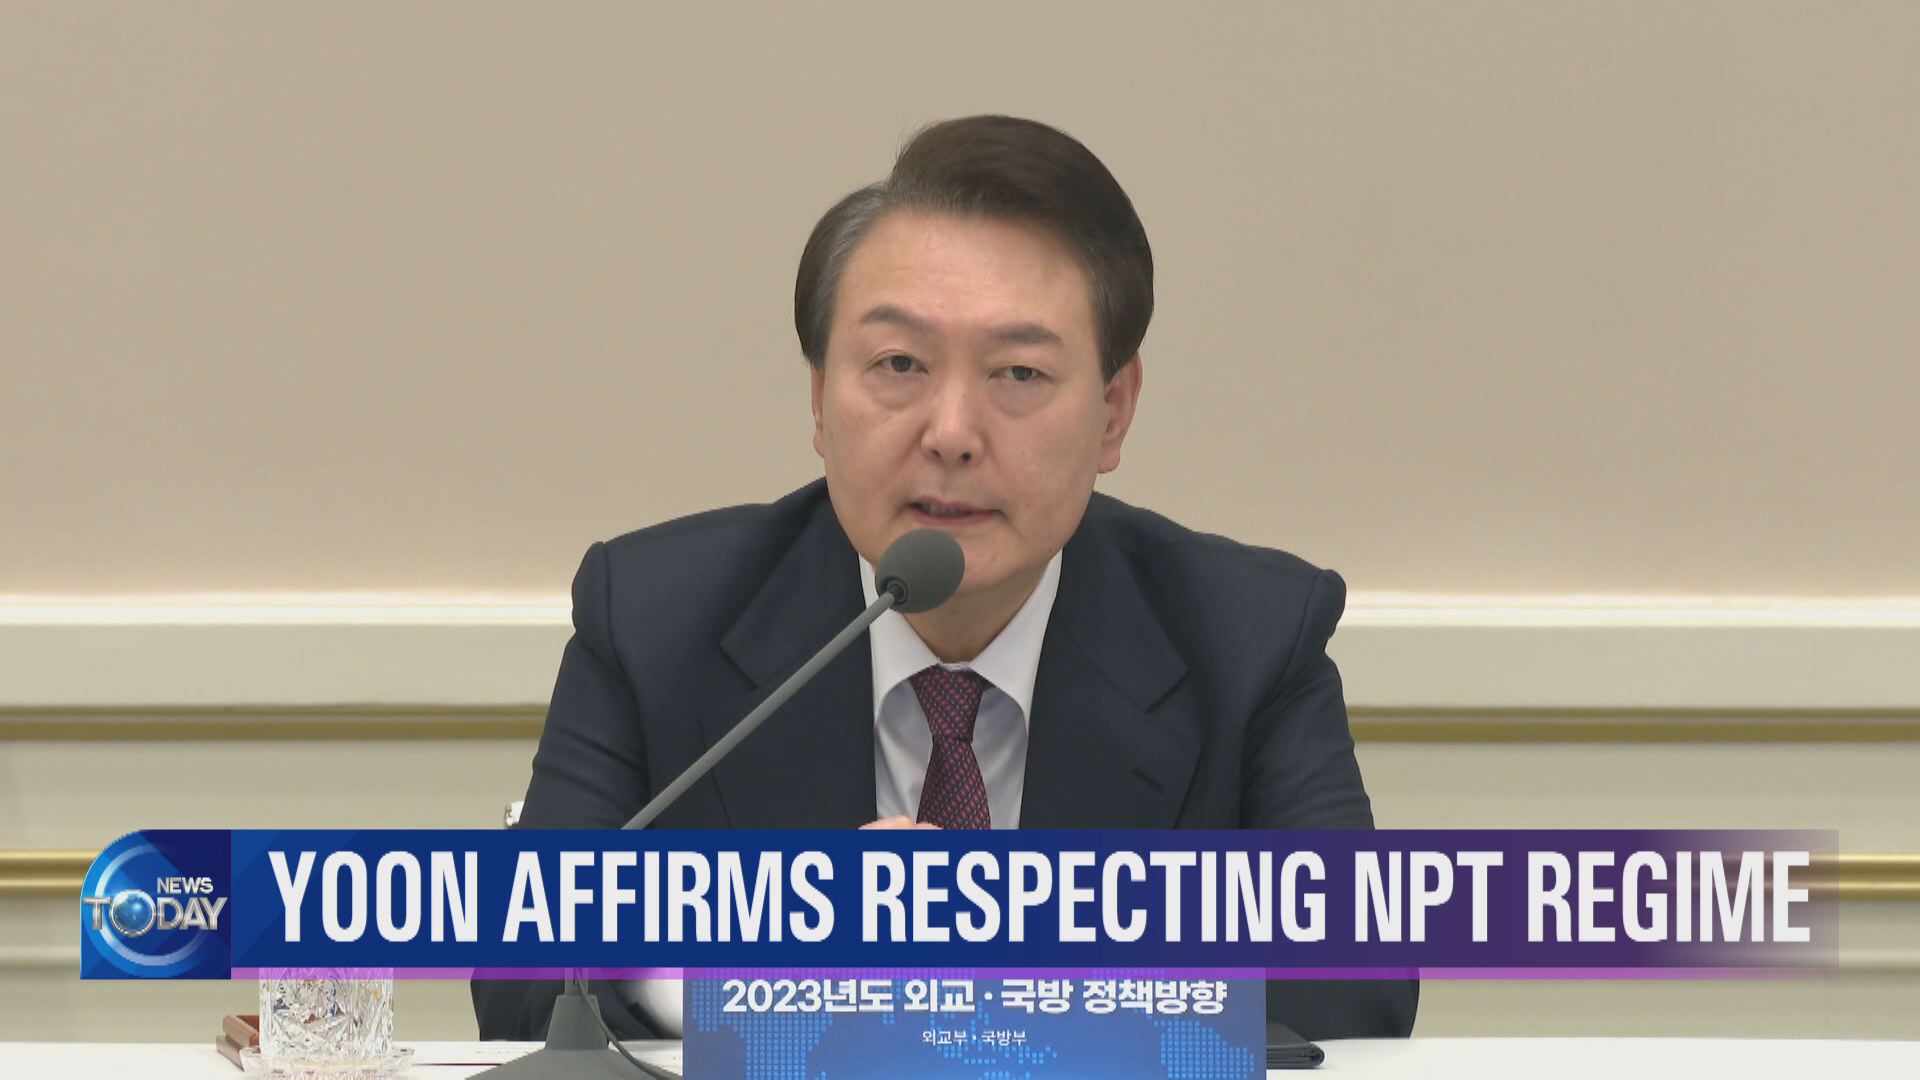 YOON AFFIRMS RESPECTING NPT REGIME